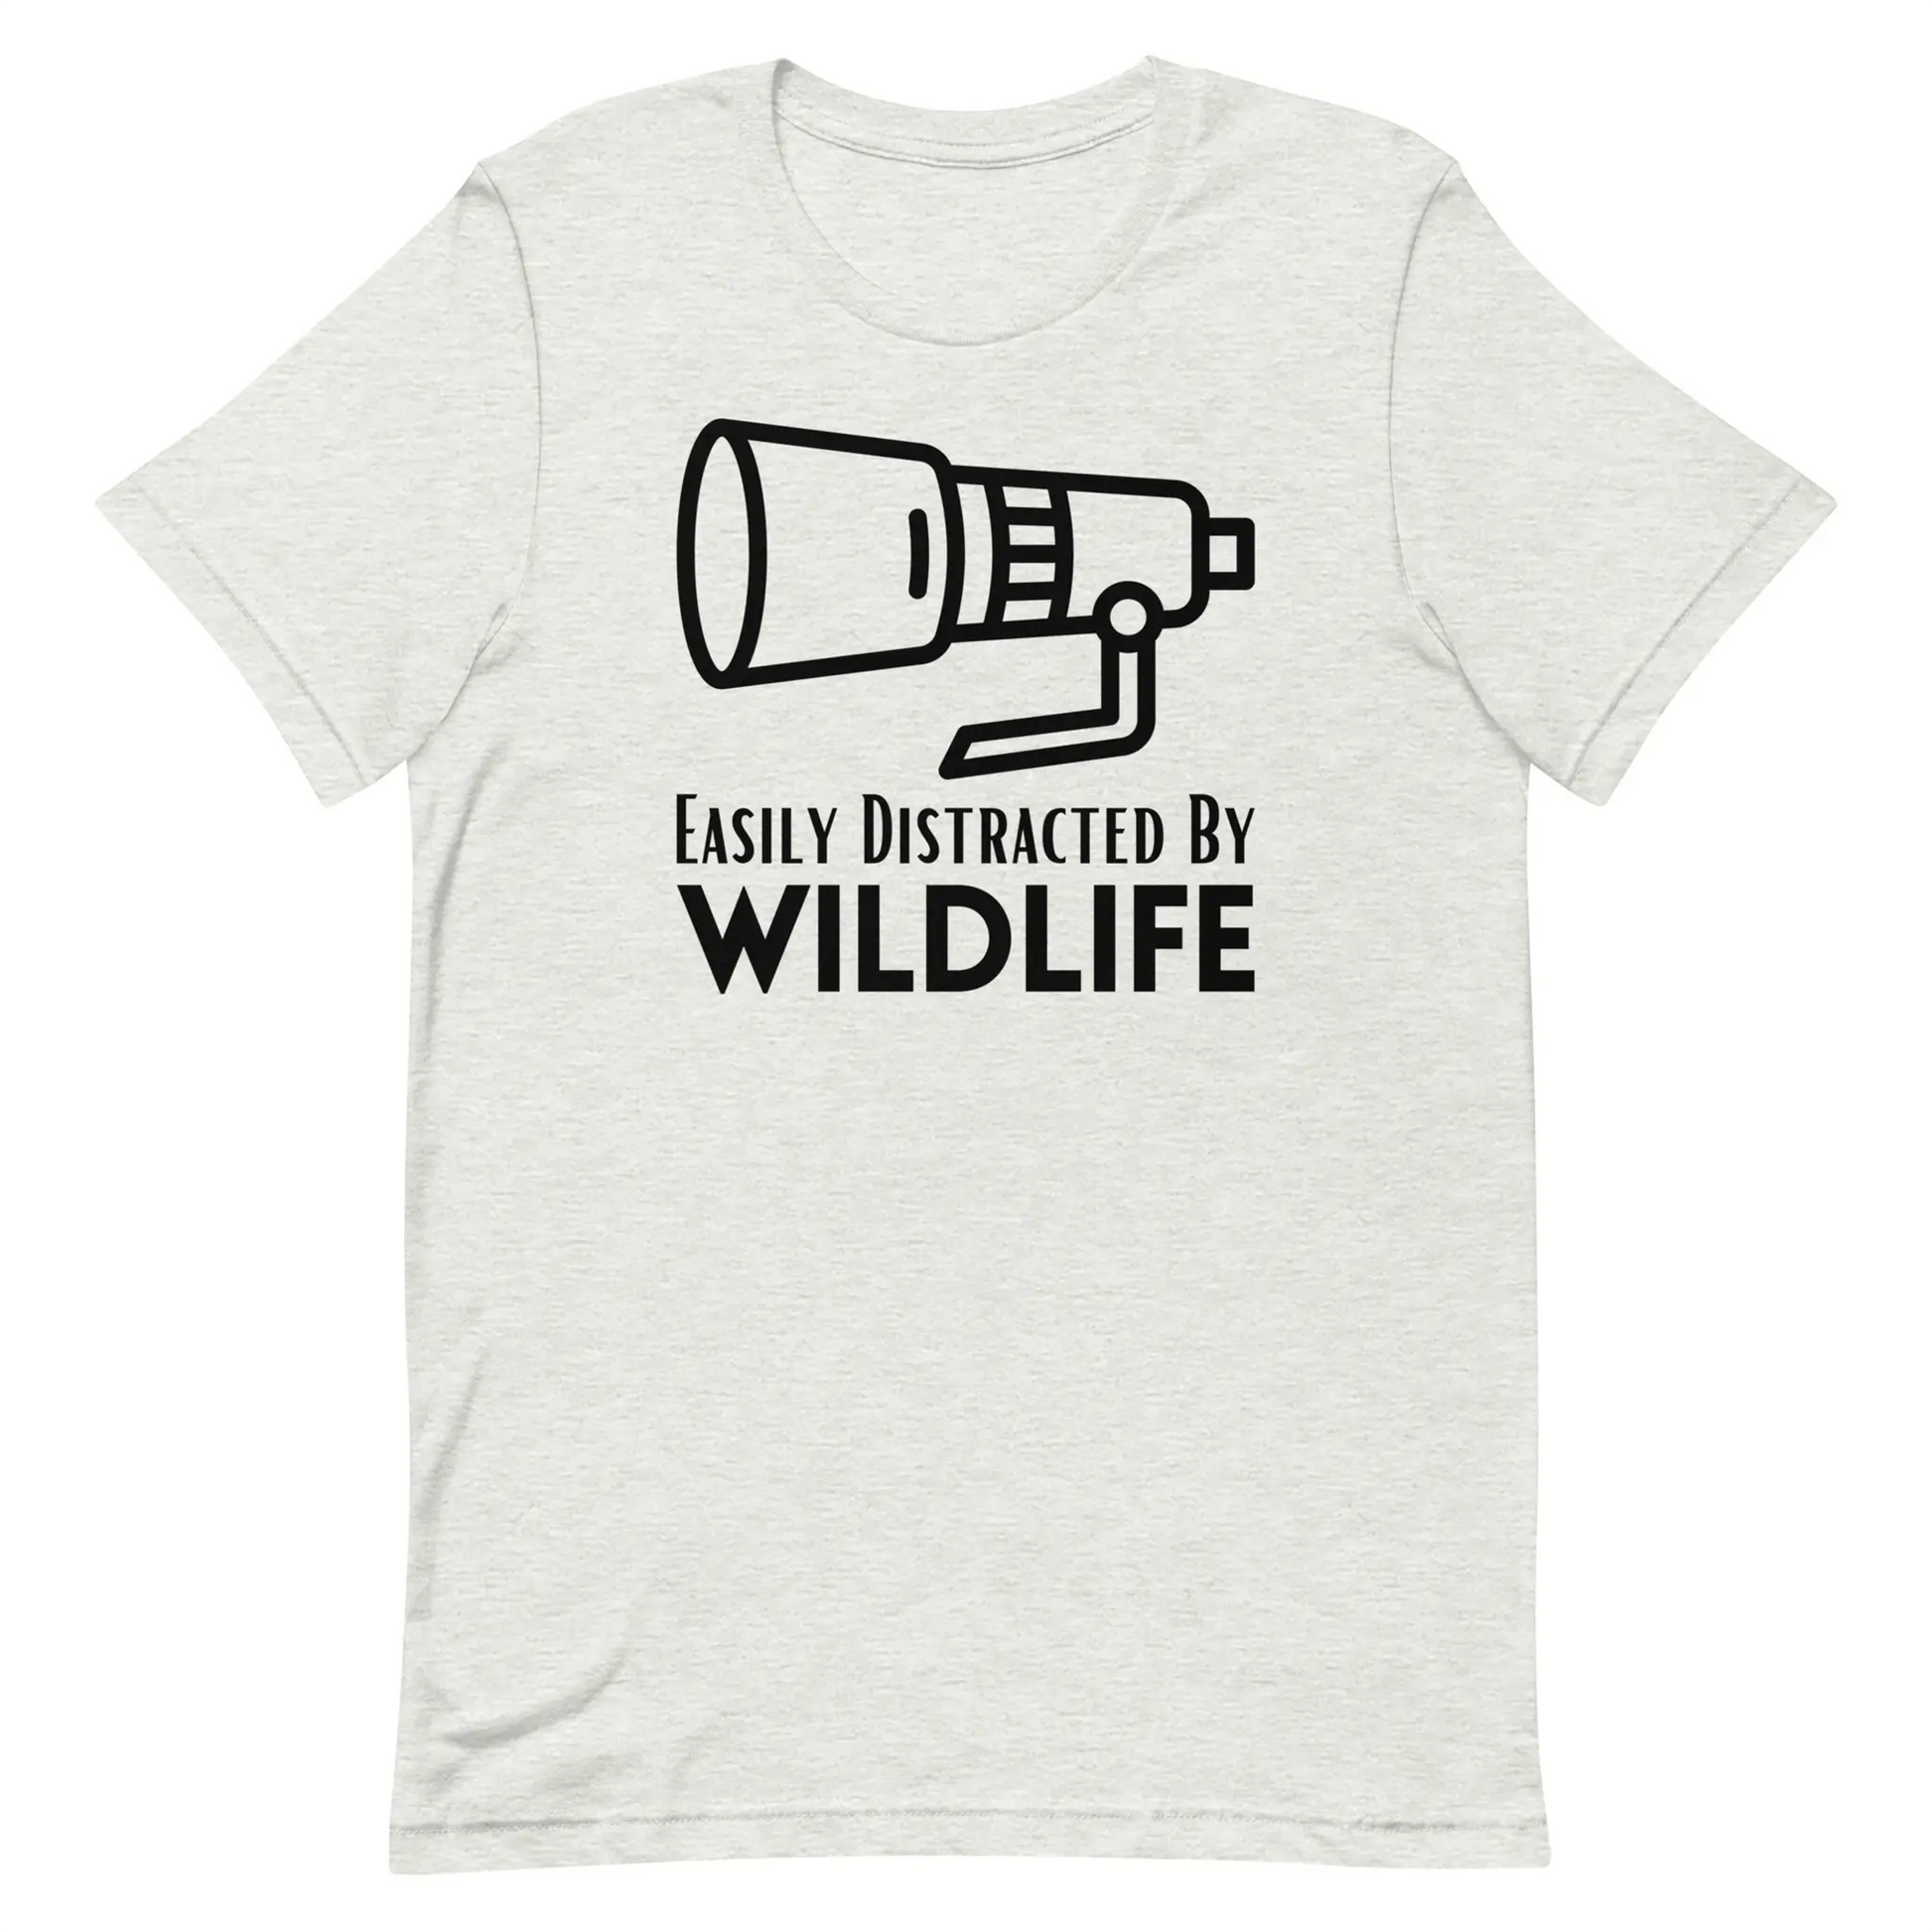 Ash Wildlife Photographer T-Shirt.